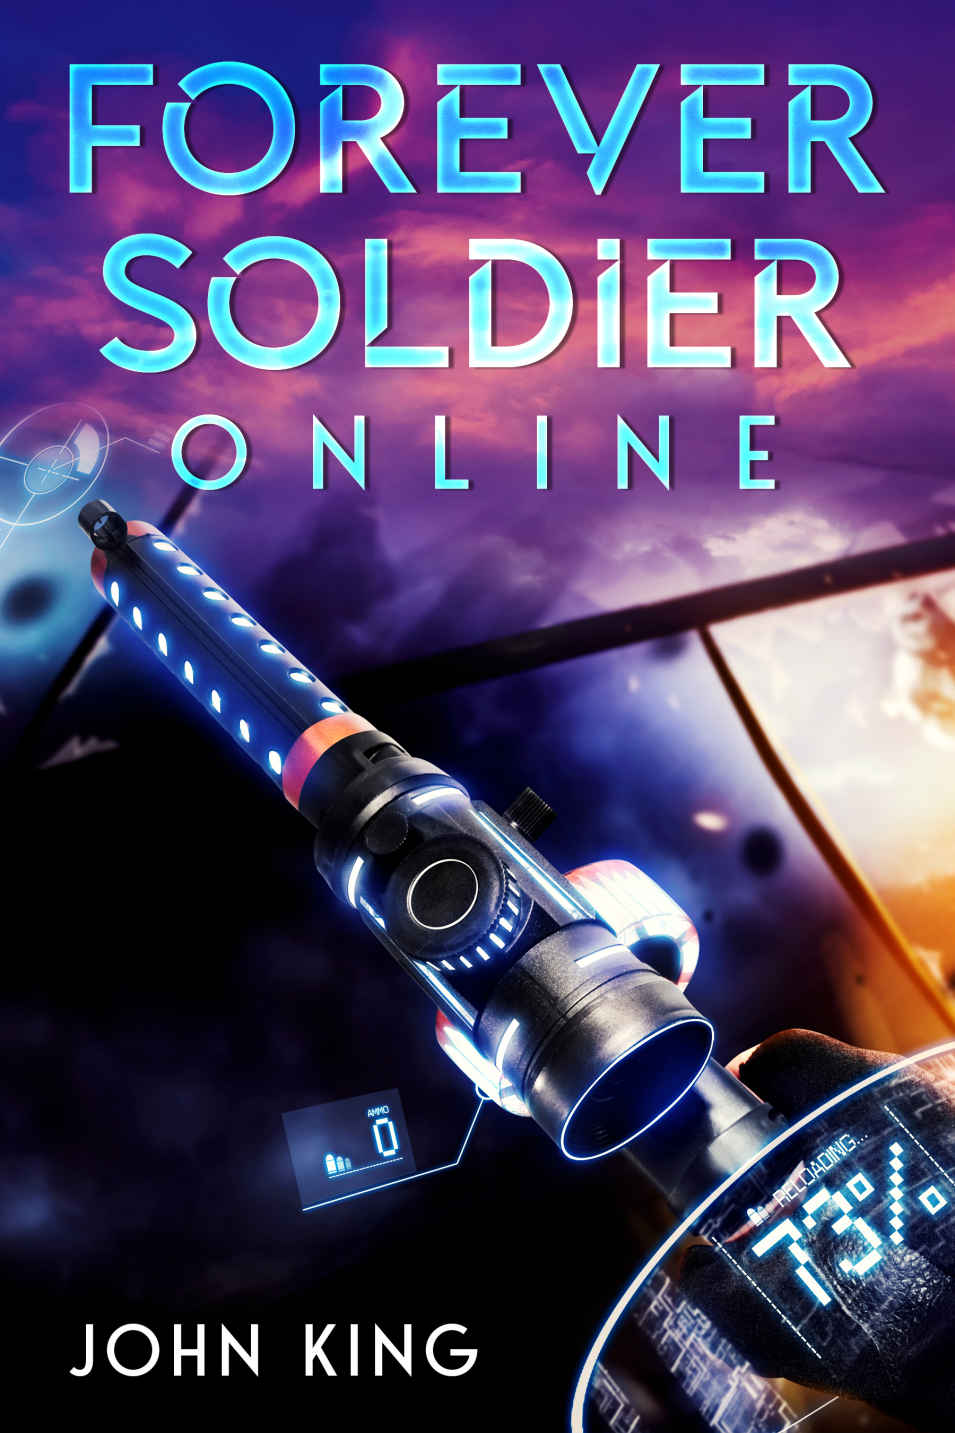 Forever Soldier Online